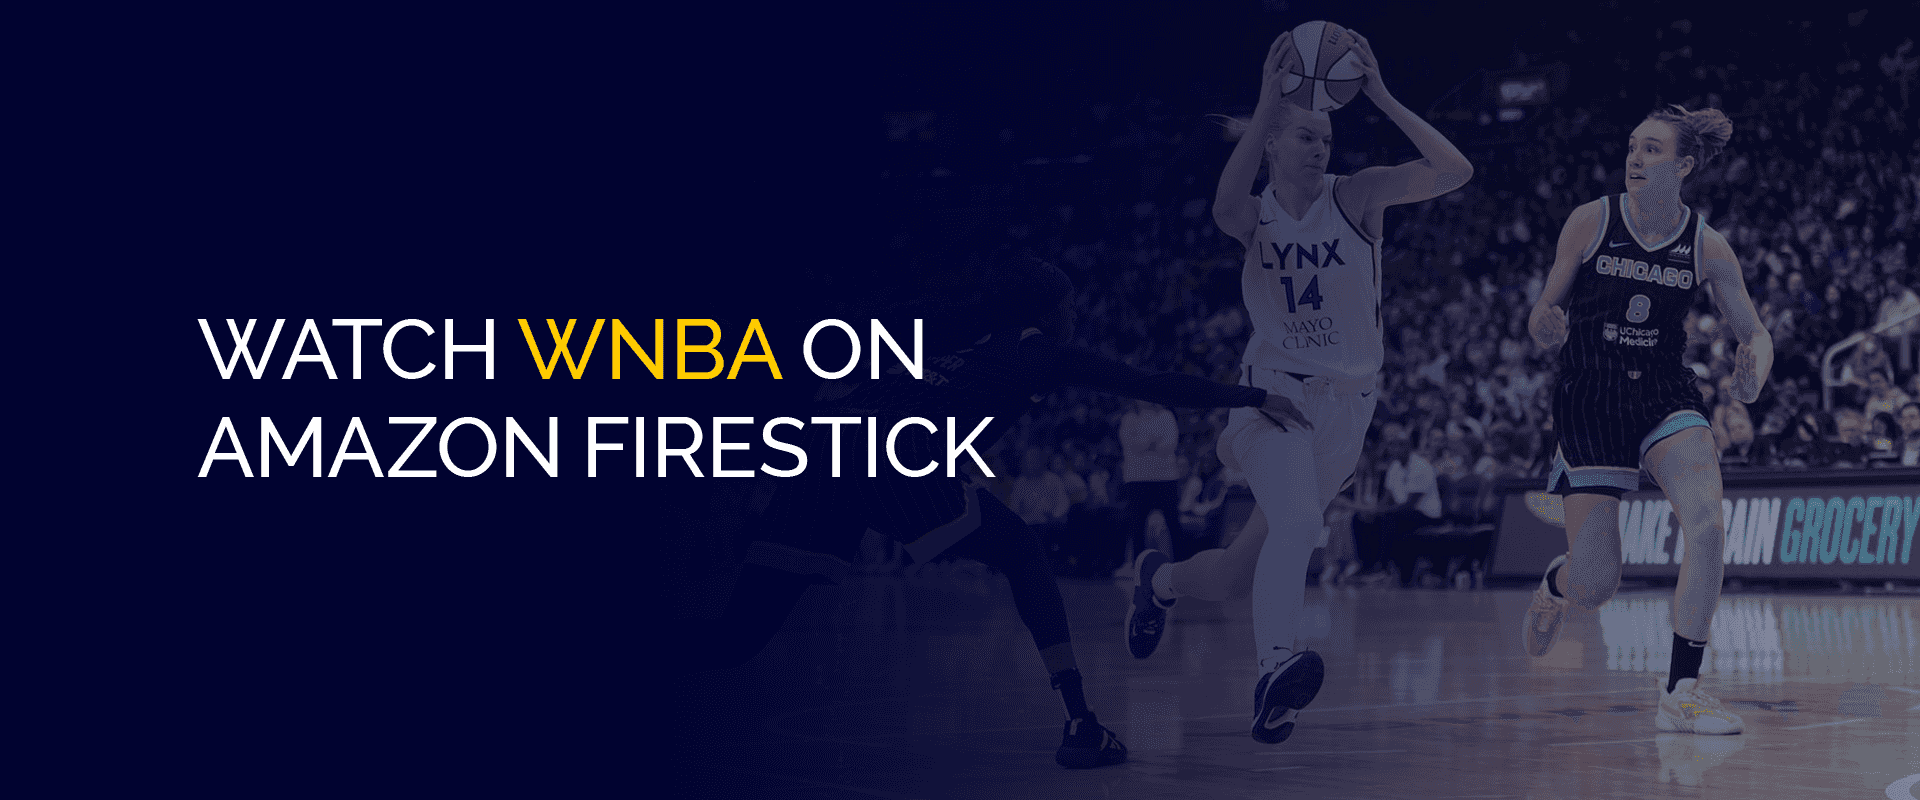 Regardez la WNBA sur Amazon Firestick